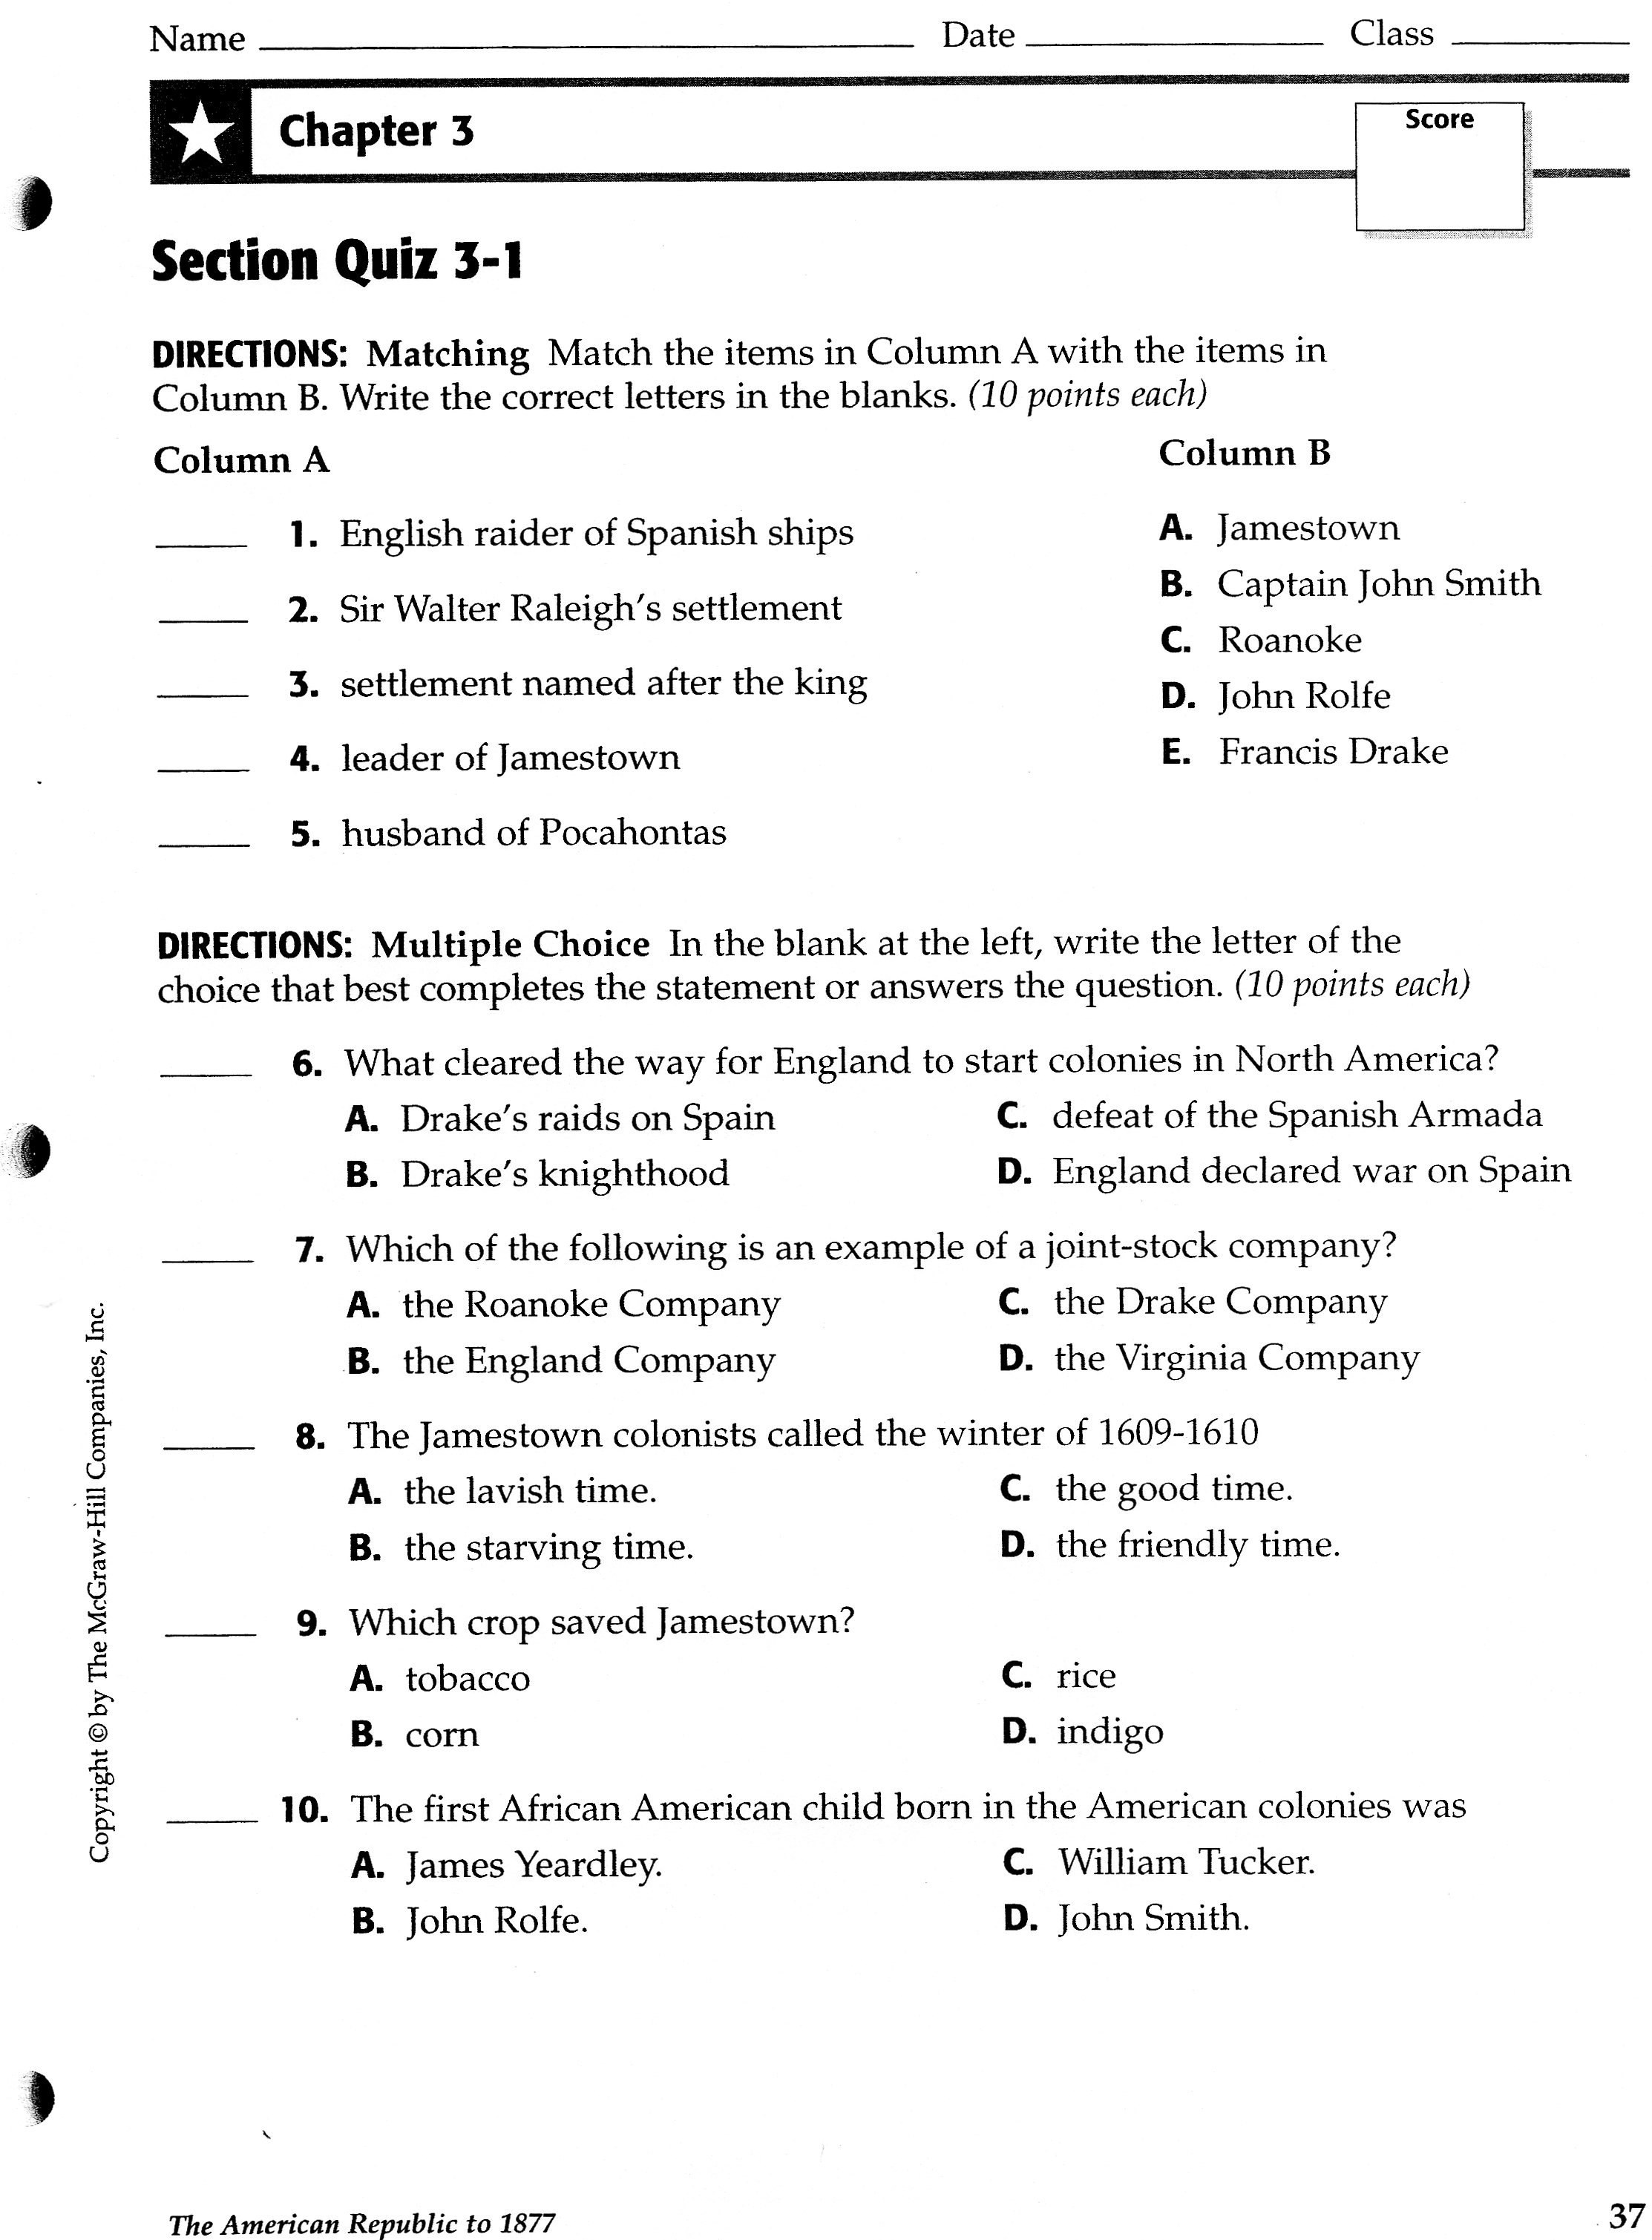 social-studies-for-7th-graders-worksheet